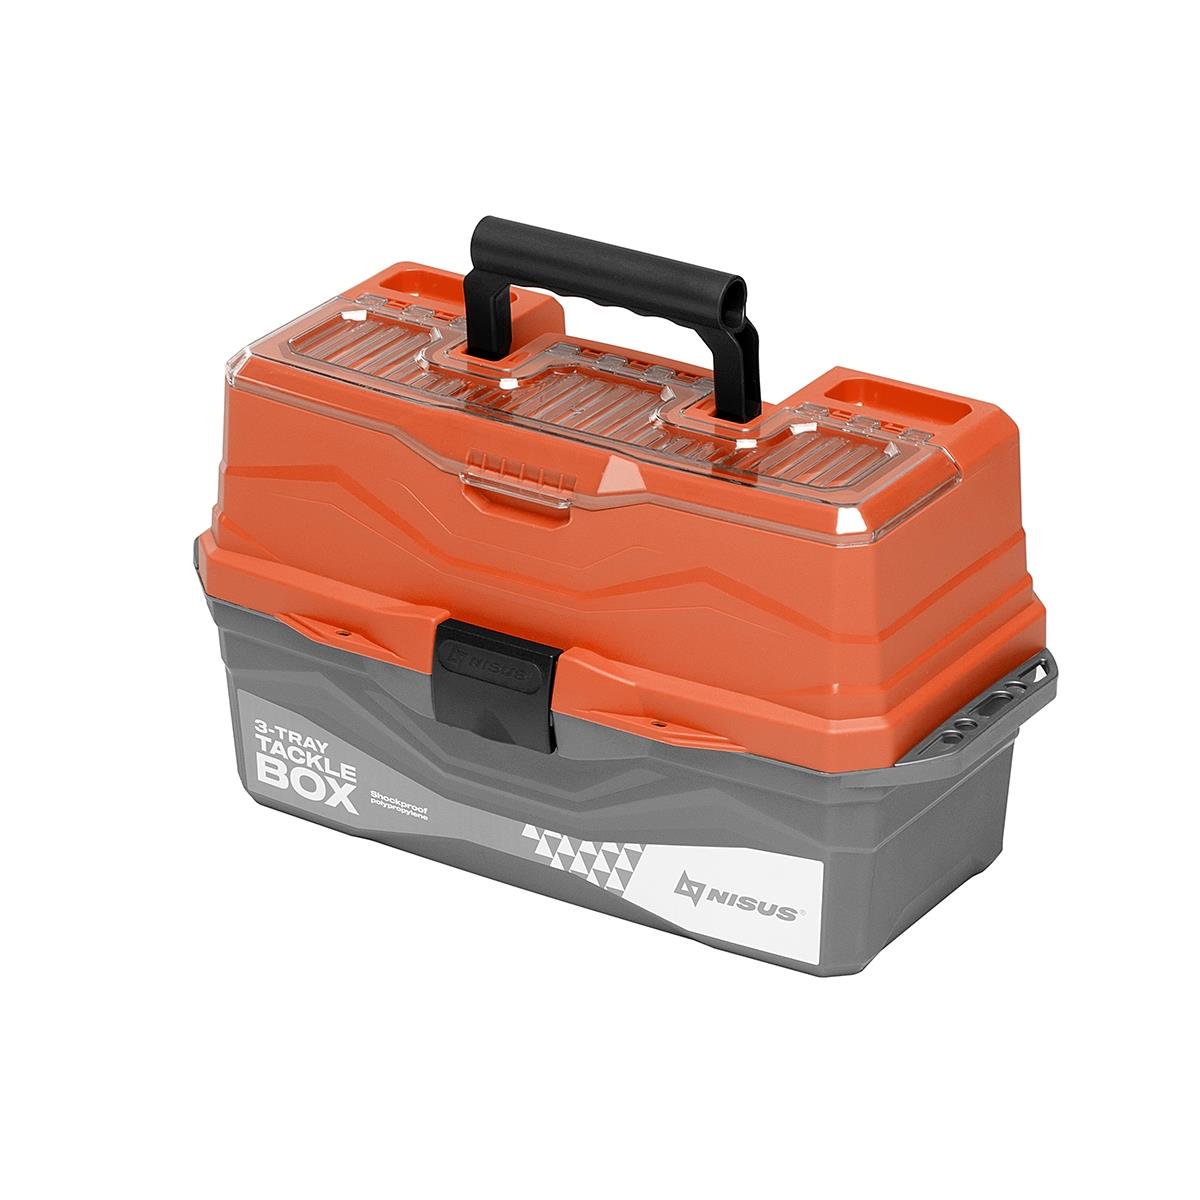 Ящик для снастей Tackle Box трехполочный оранжевый (N-TB-3-O) NISUS ящик для снастей tackle box трехполочный бирюзовый n tb 3 т nisus